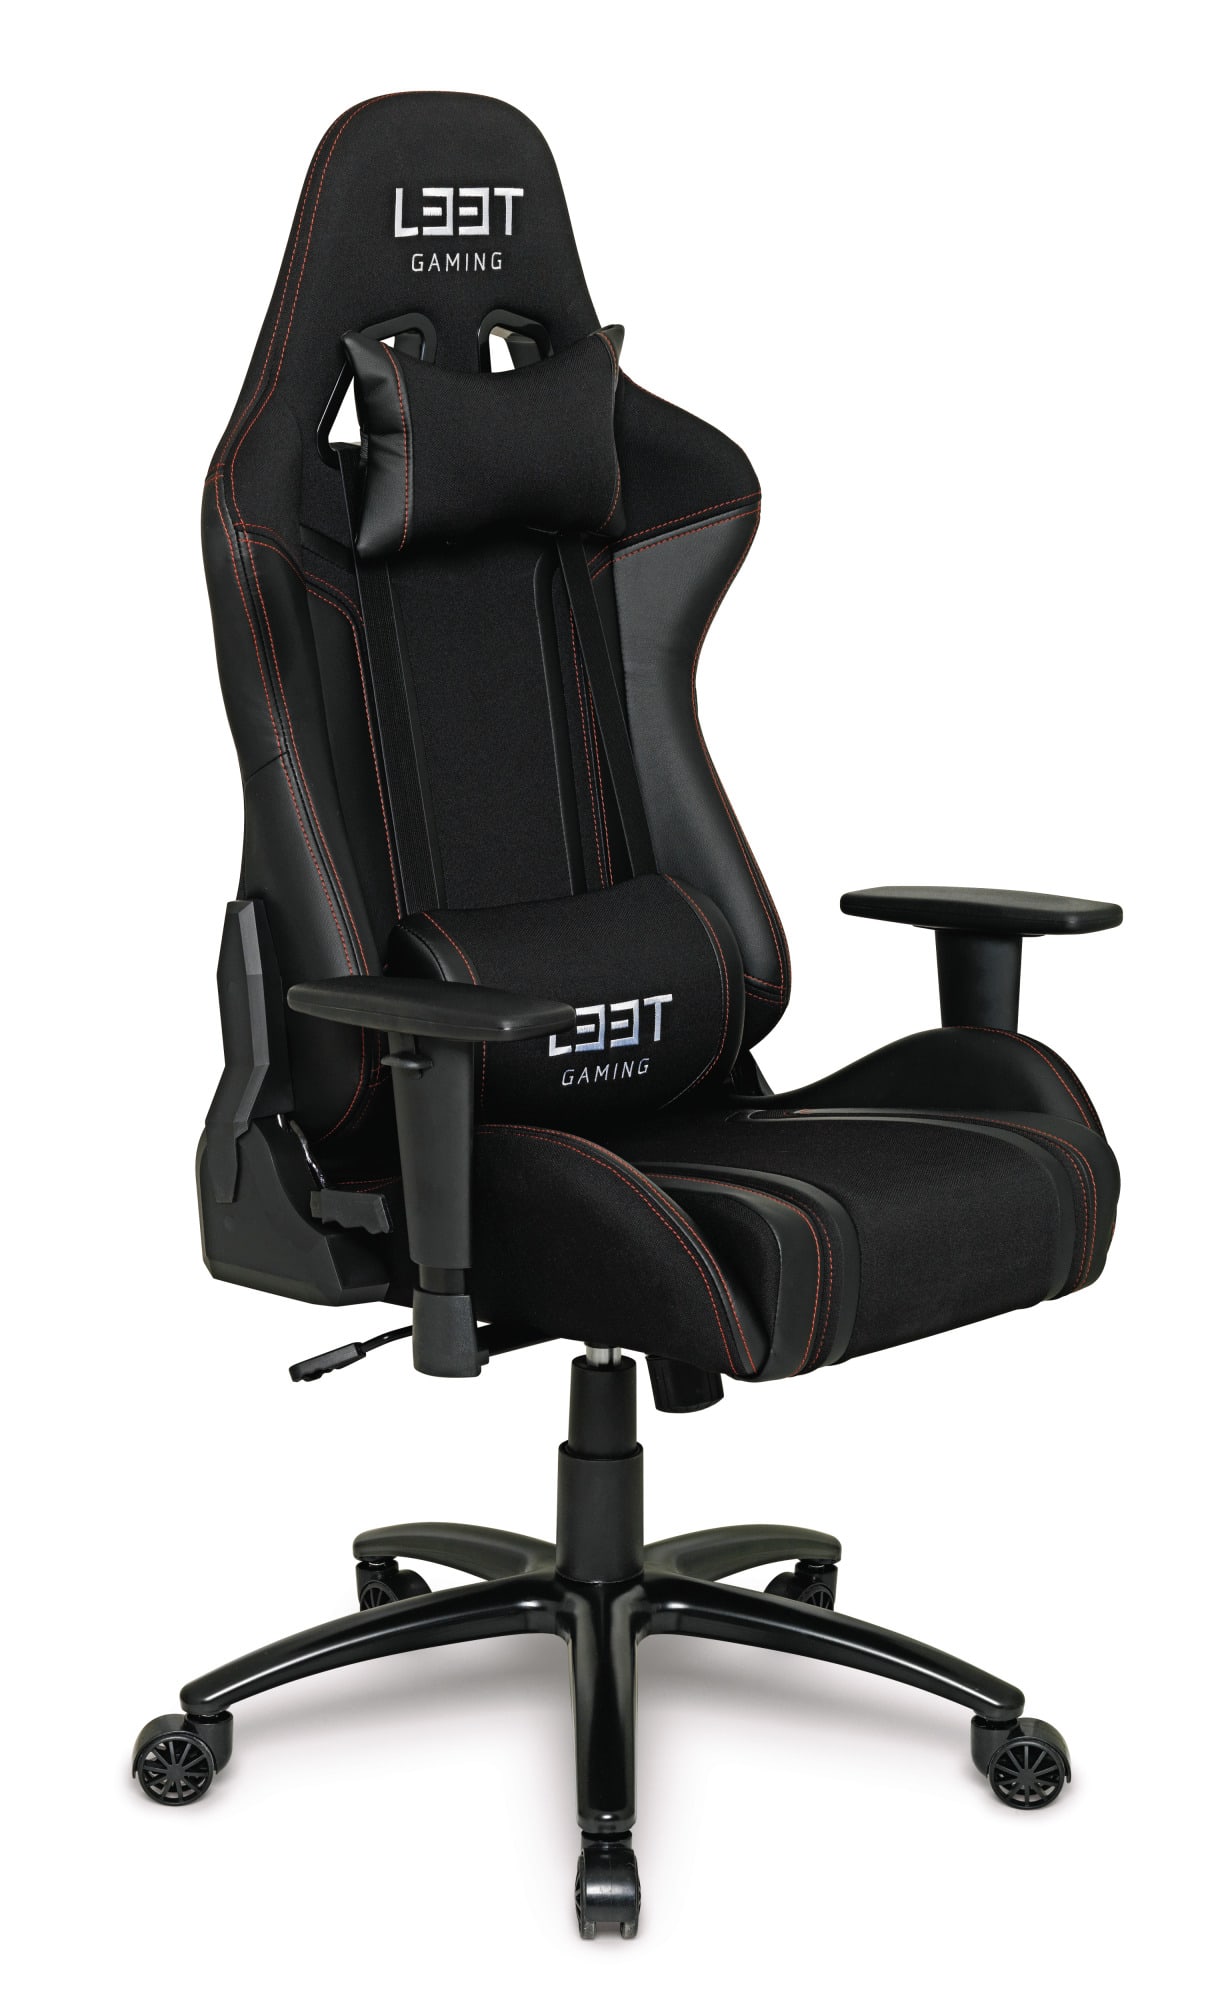 L33t Gaming кресло